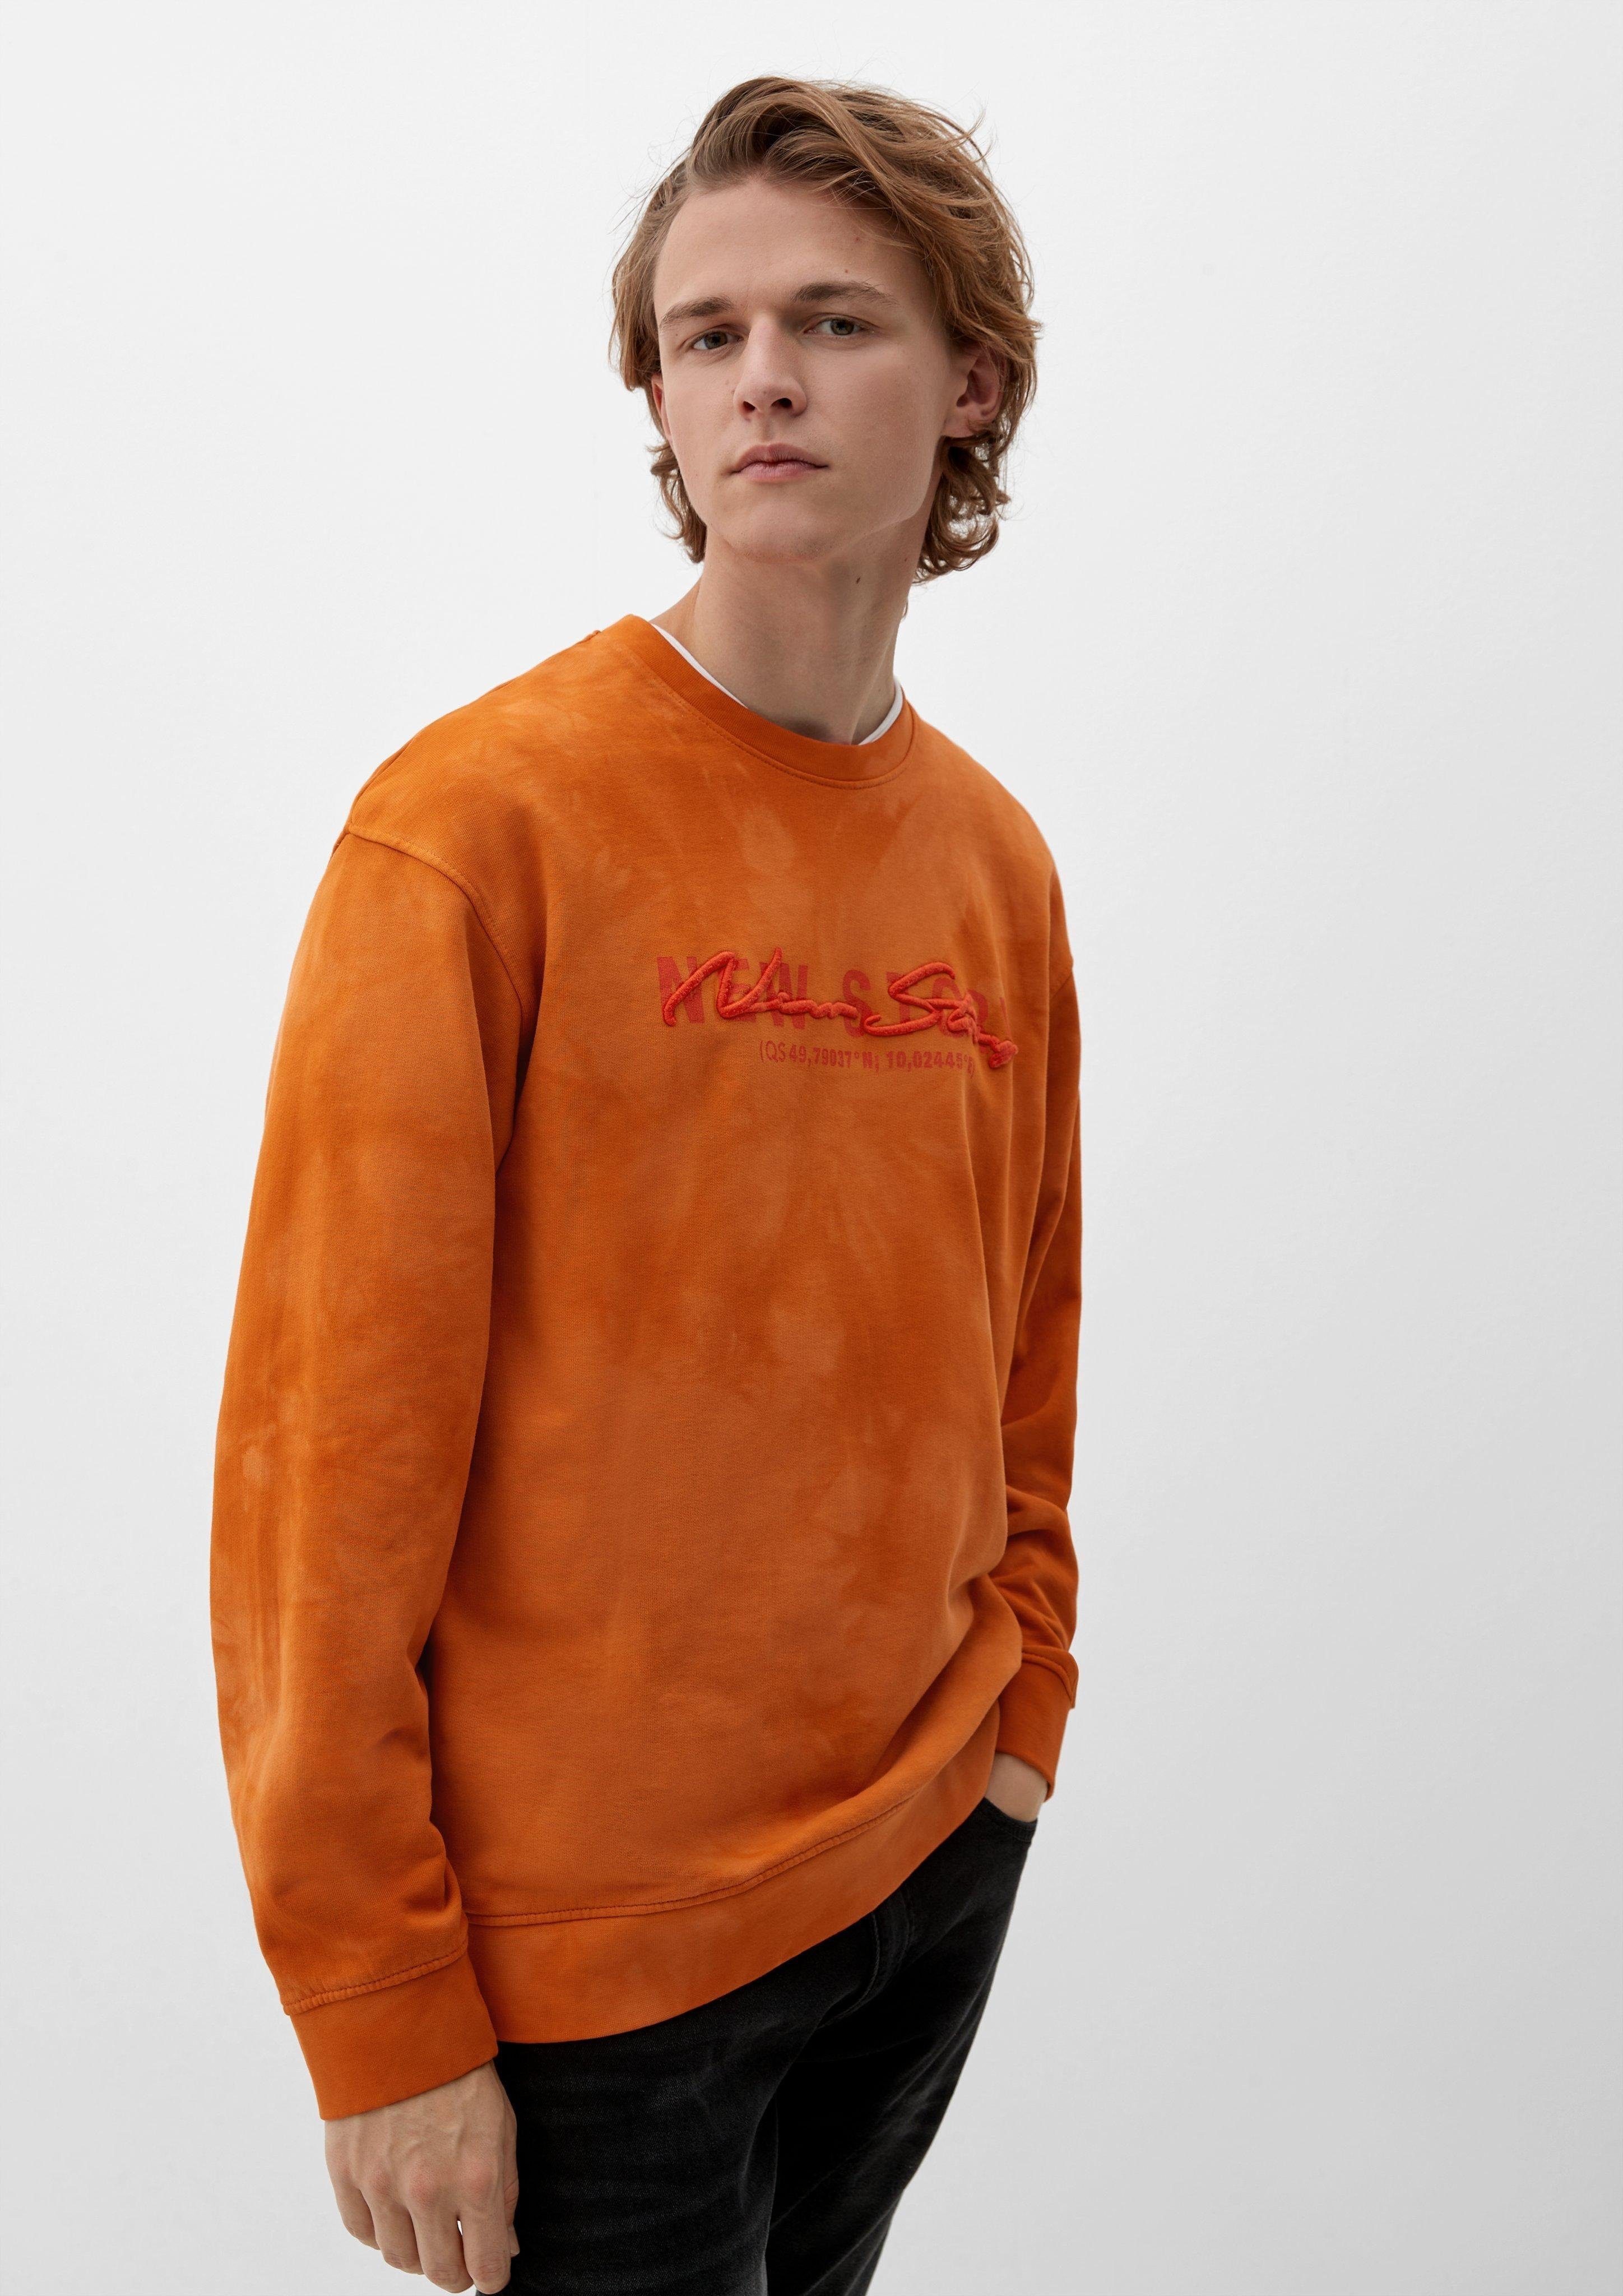 Sweatshirt in Batik-Optik QS Stickerei orange Sweatshirt